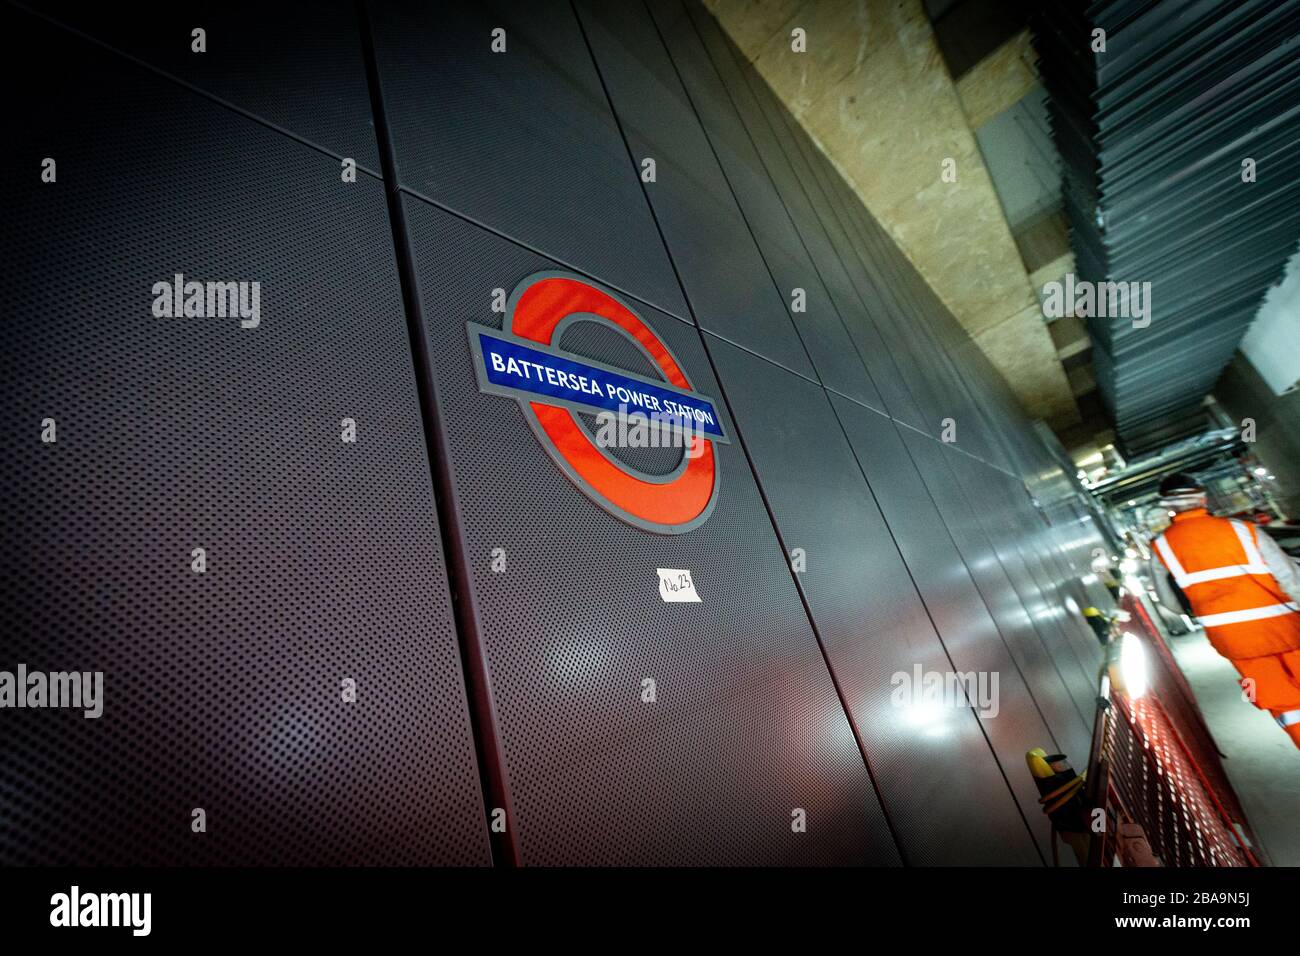 Battersea Power Station, London Underground Station Roundel Stockfoto